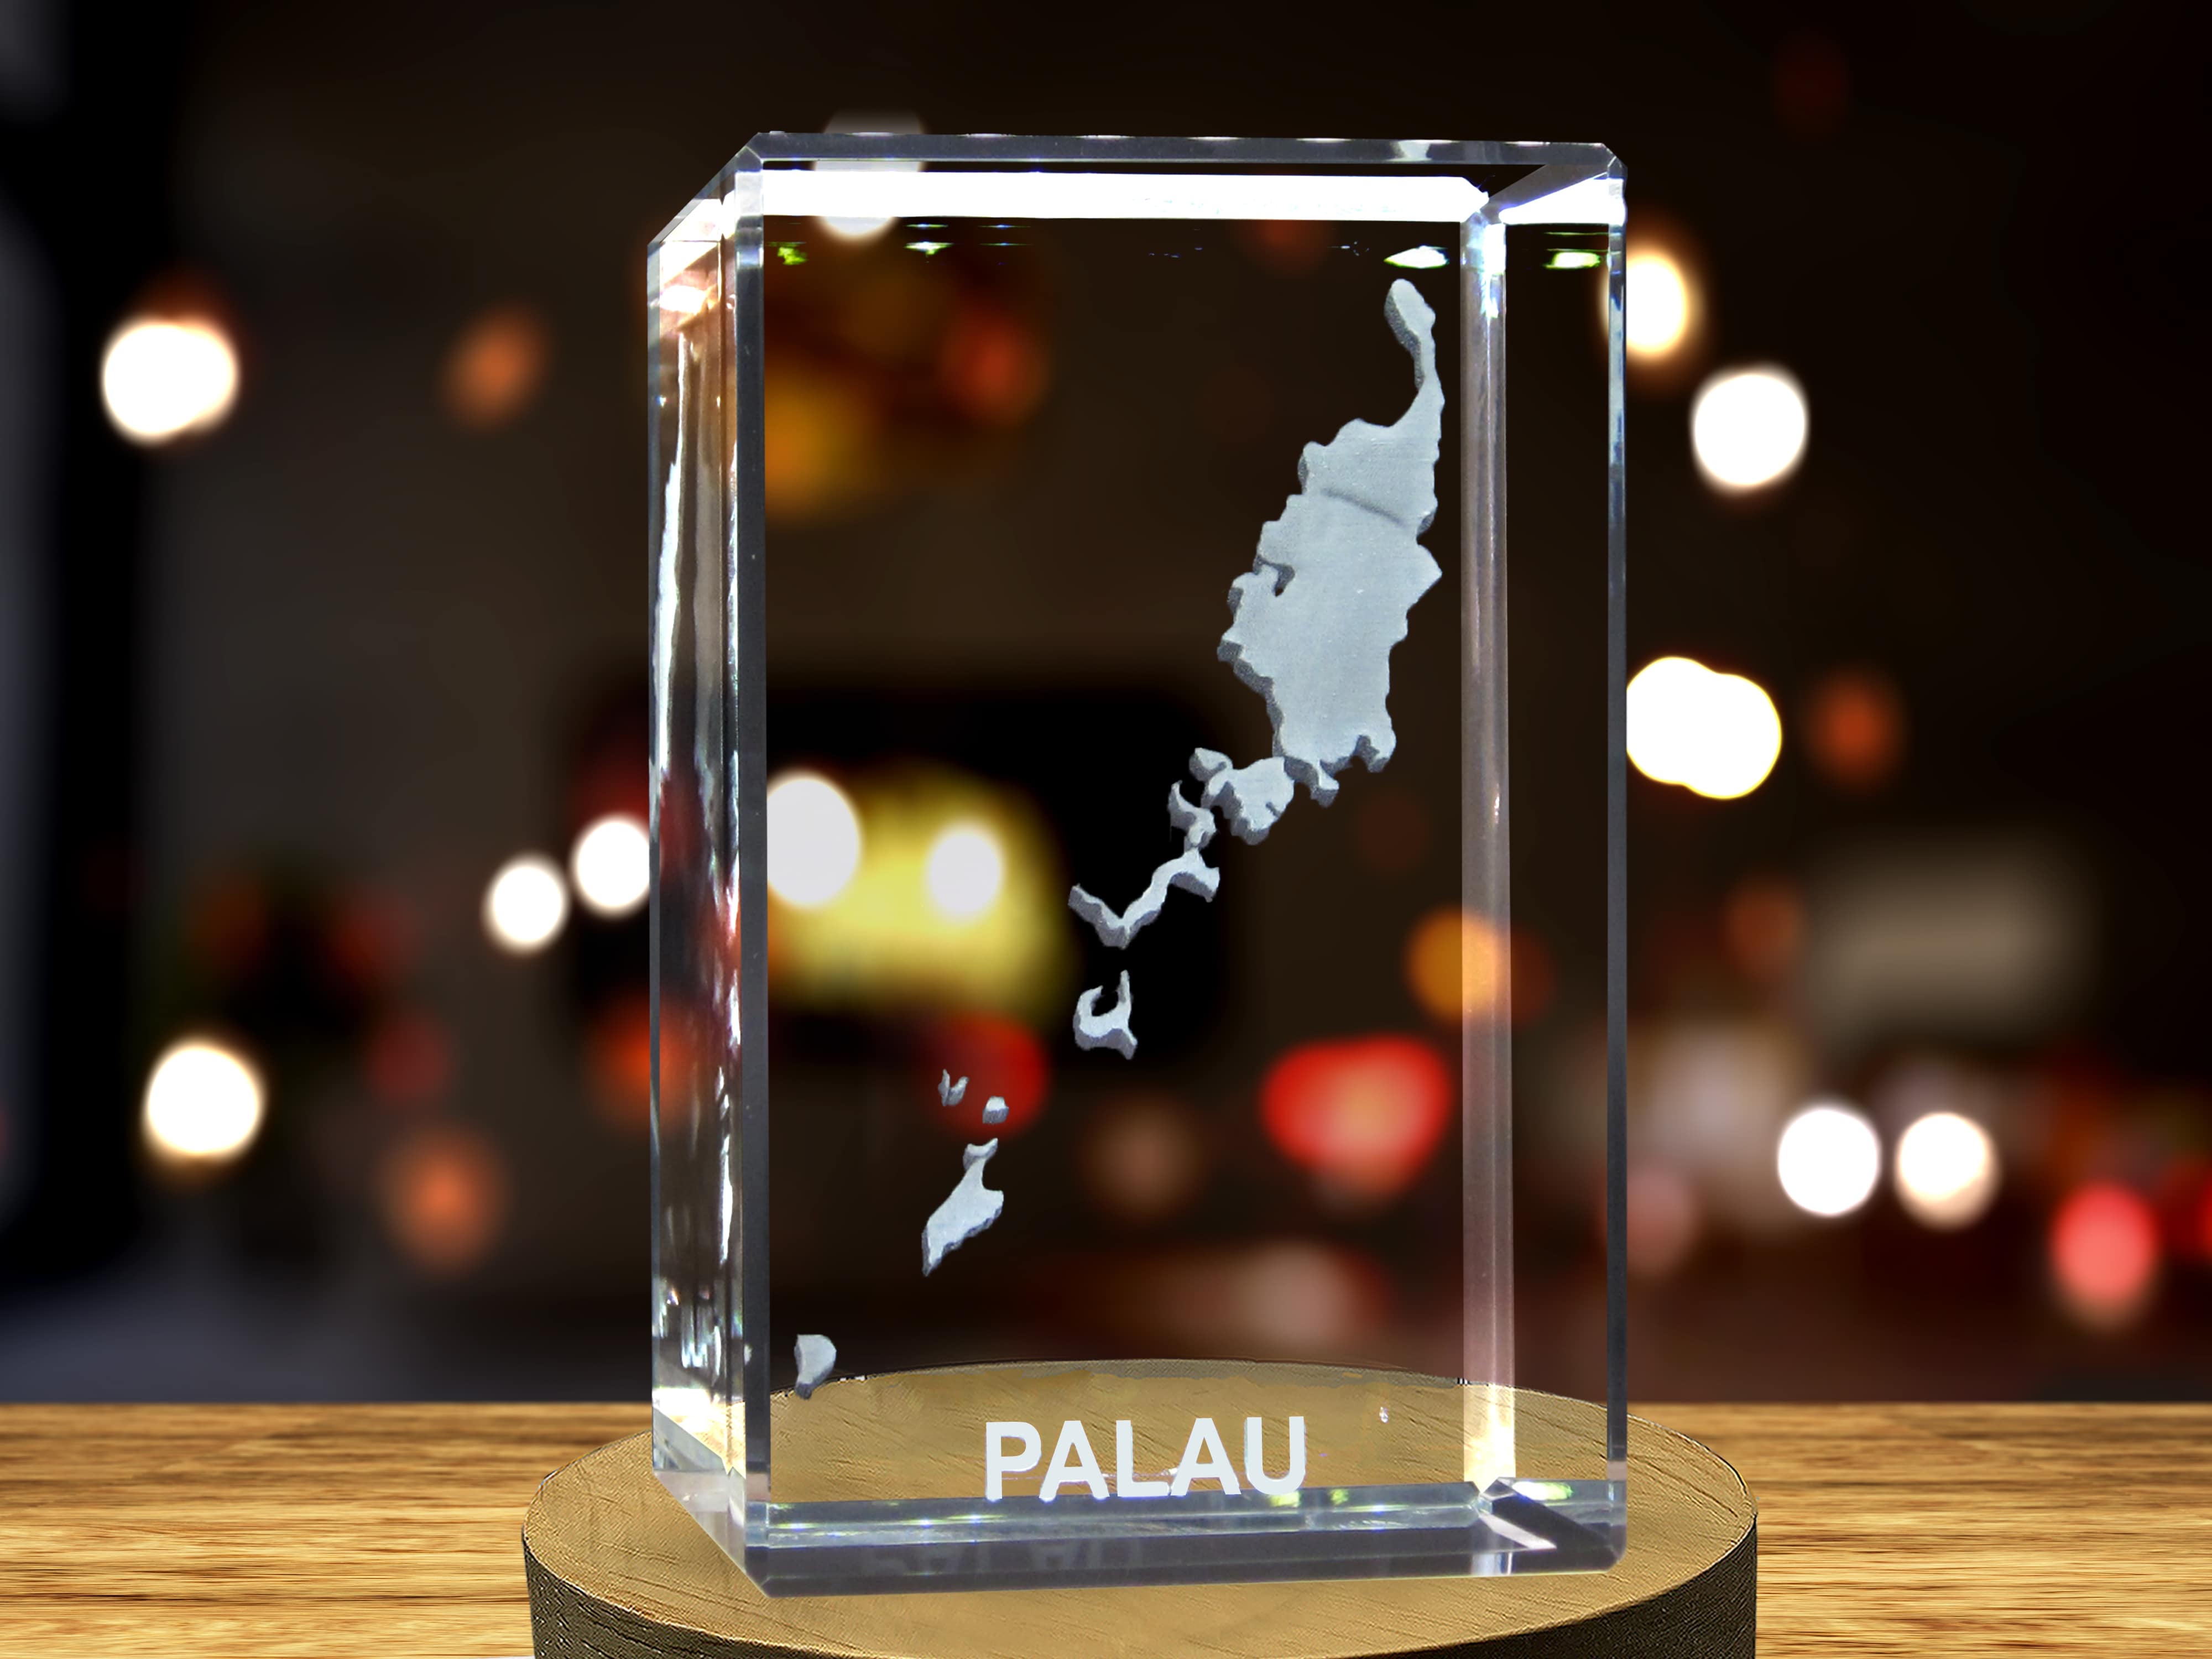 Palau 3D Engraved Crystal 3D Engraved Crystal Keepsake/Gift/Decor/Collectible/Souvenir A&B Crystal Collection